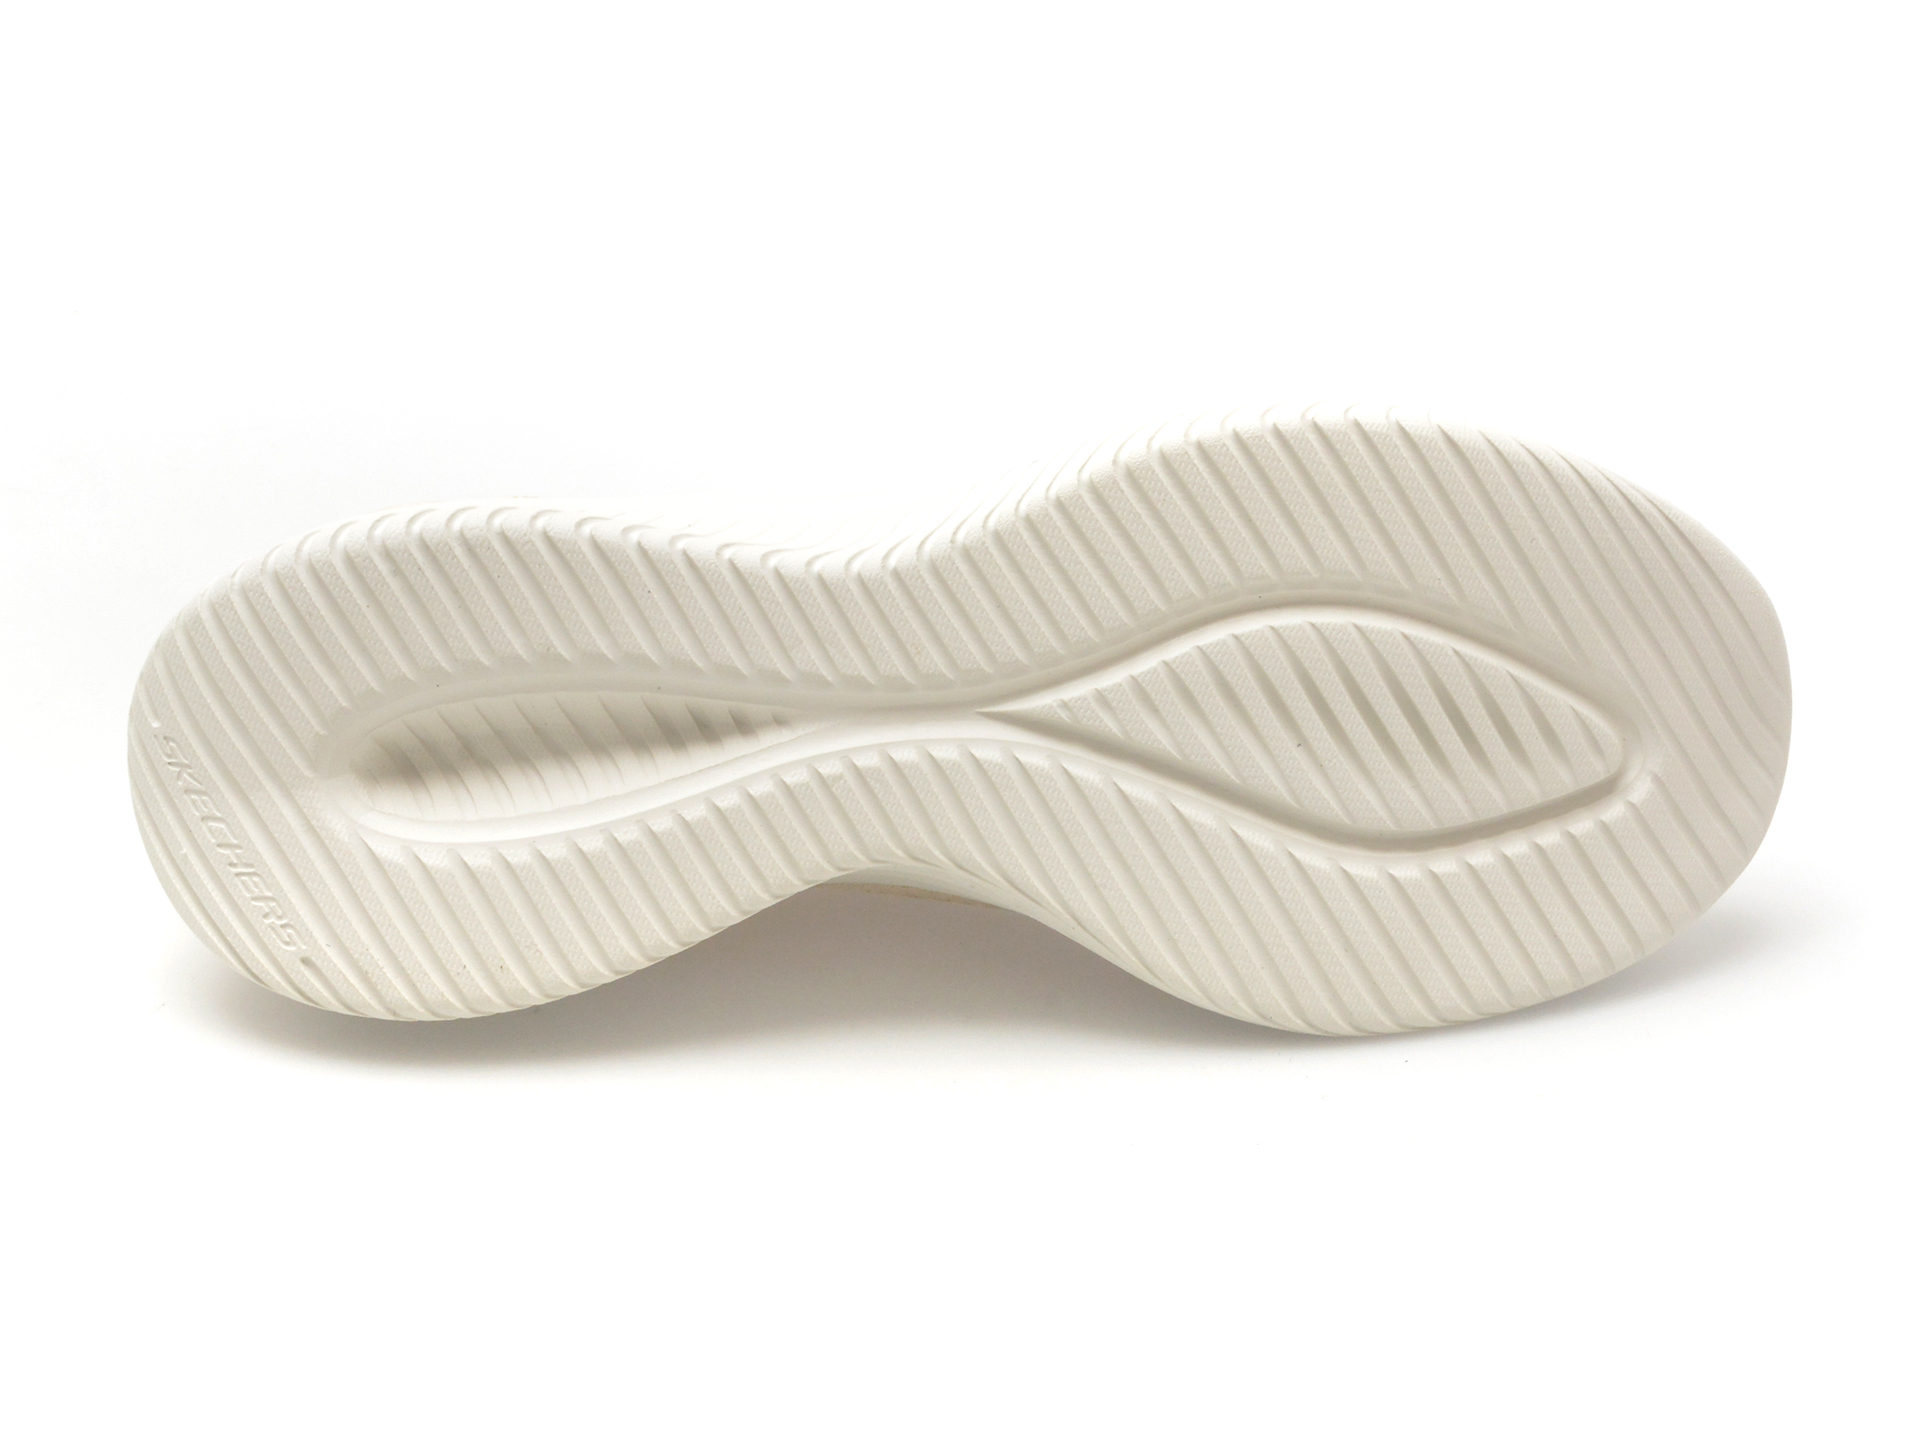 Pantofi sport SKECHERS bej, ULTRA FLEX 3.0, din material textil